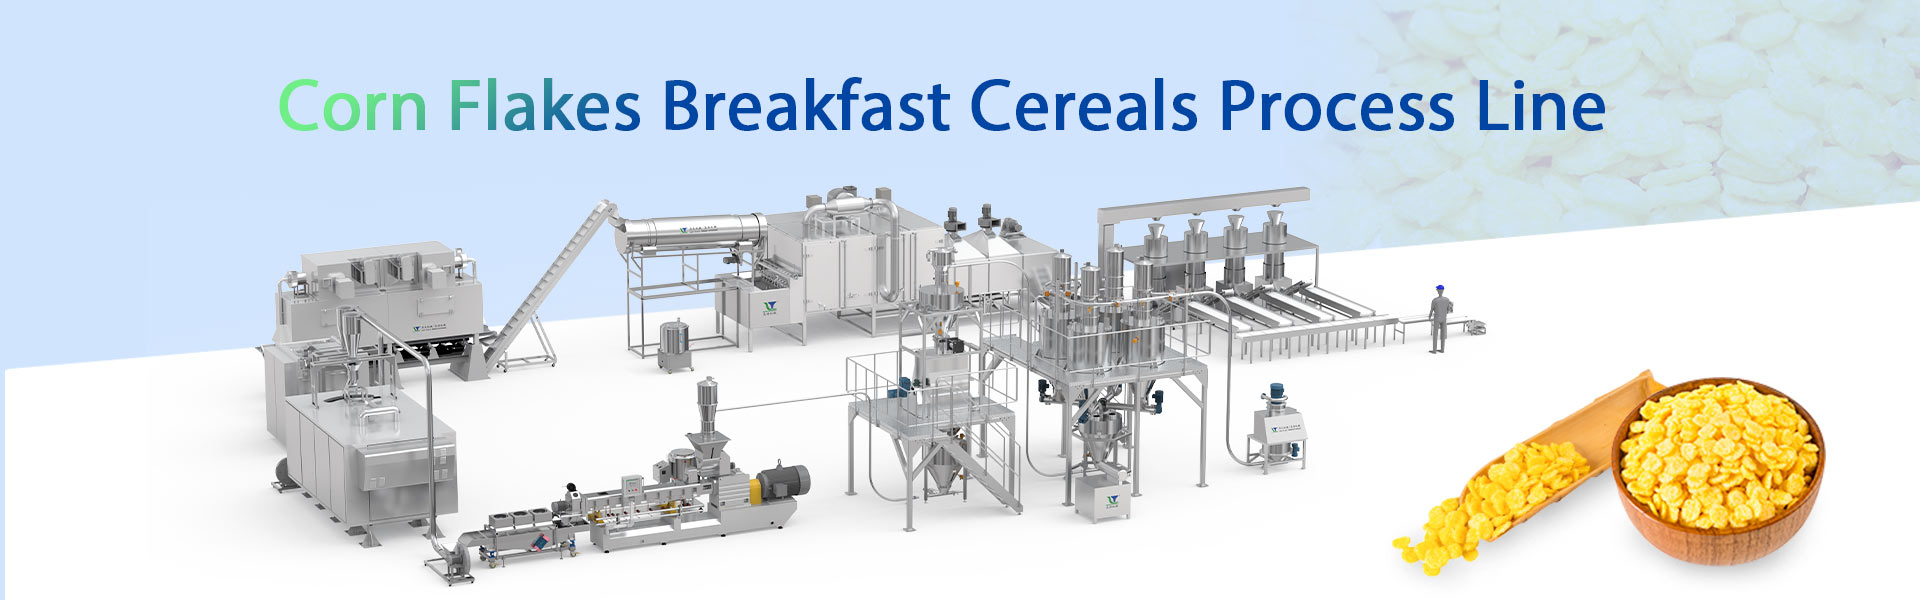 Corn Flakes Breakfast Cereals Process Line 